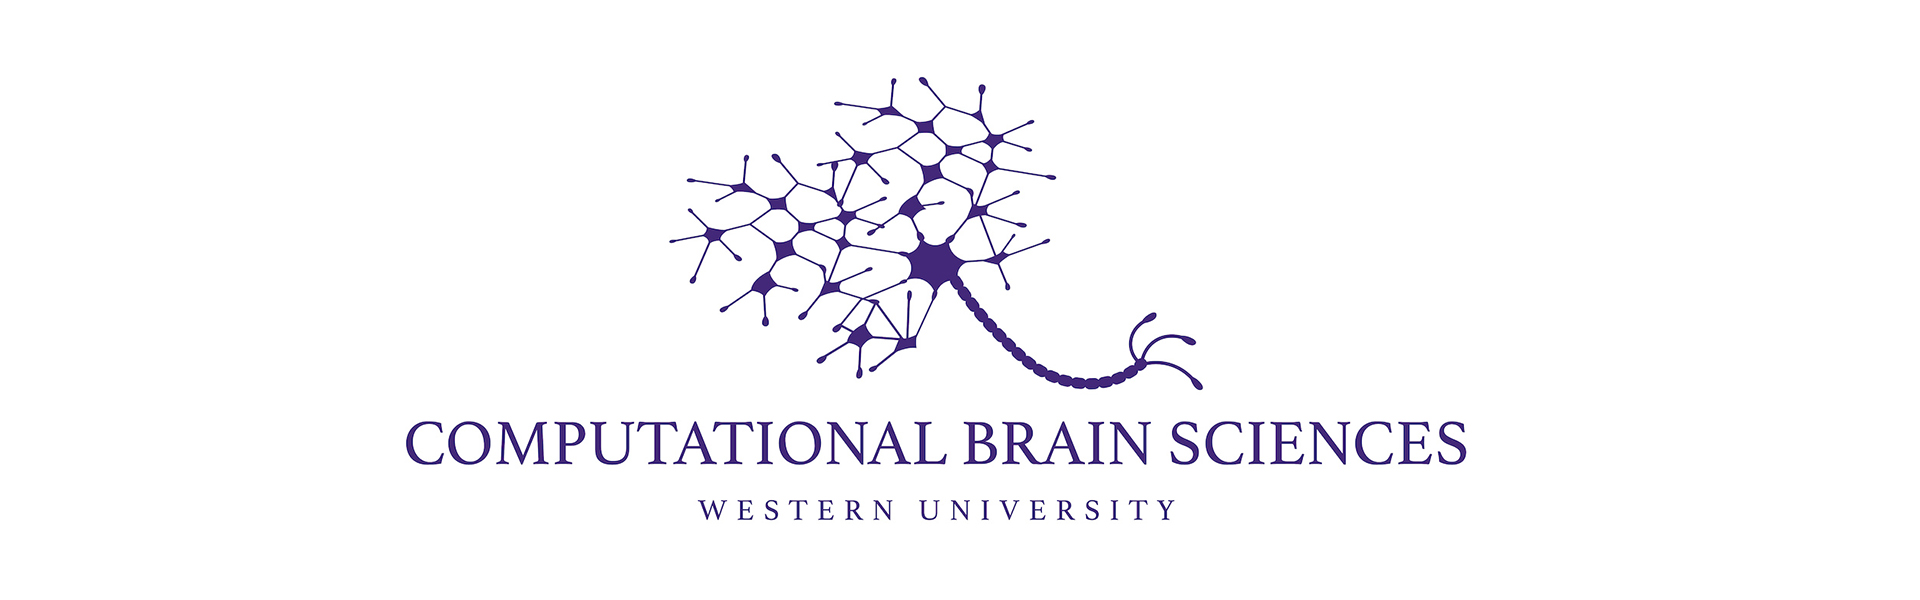 Test: Computational Brain Science. Image: Abstract Brain network